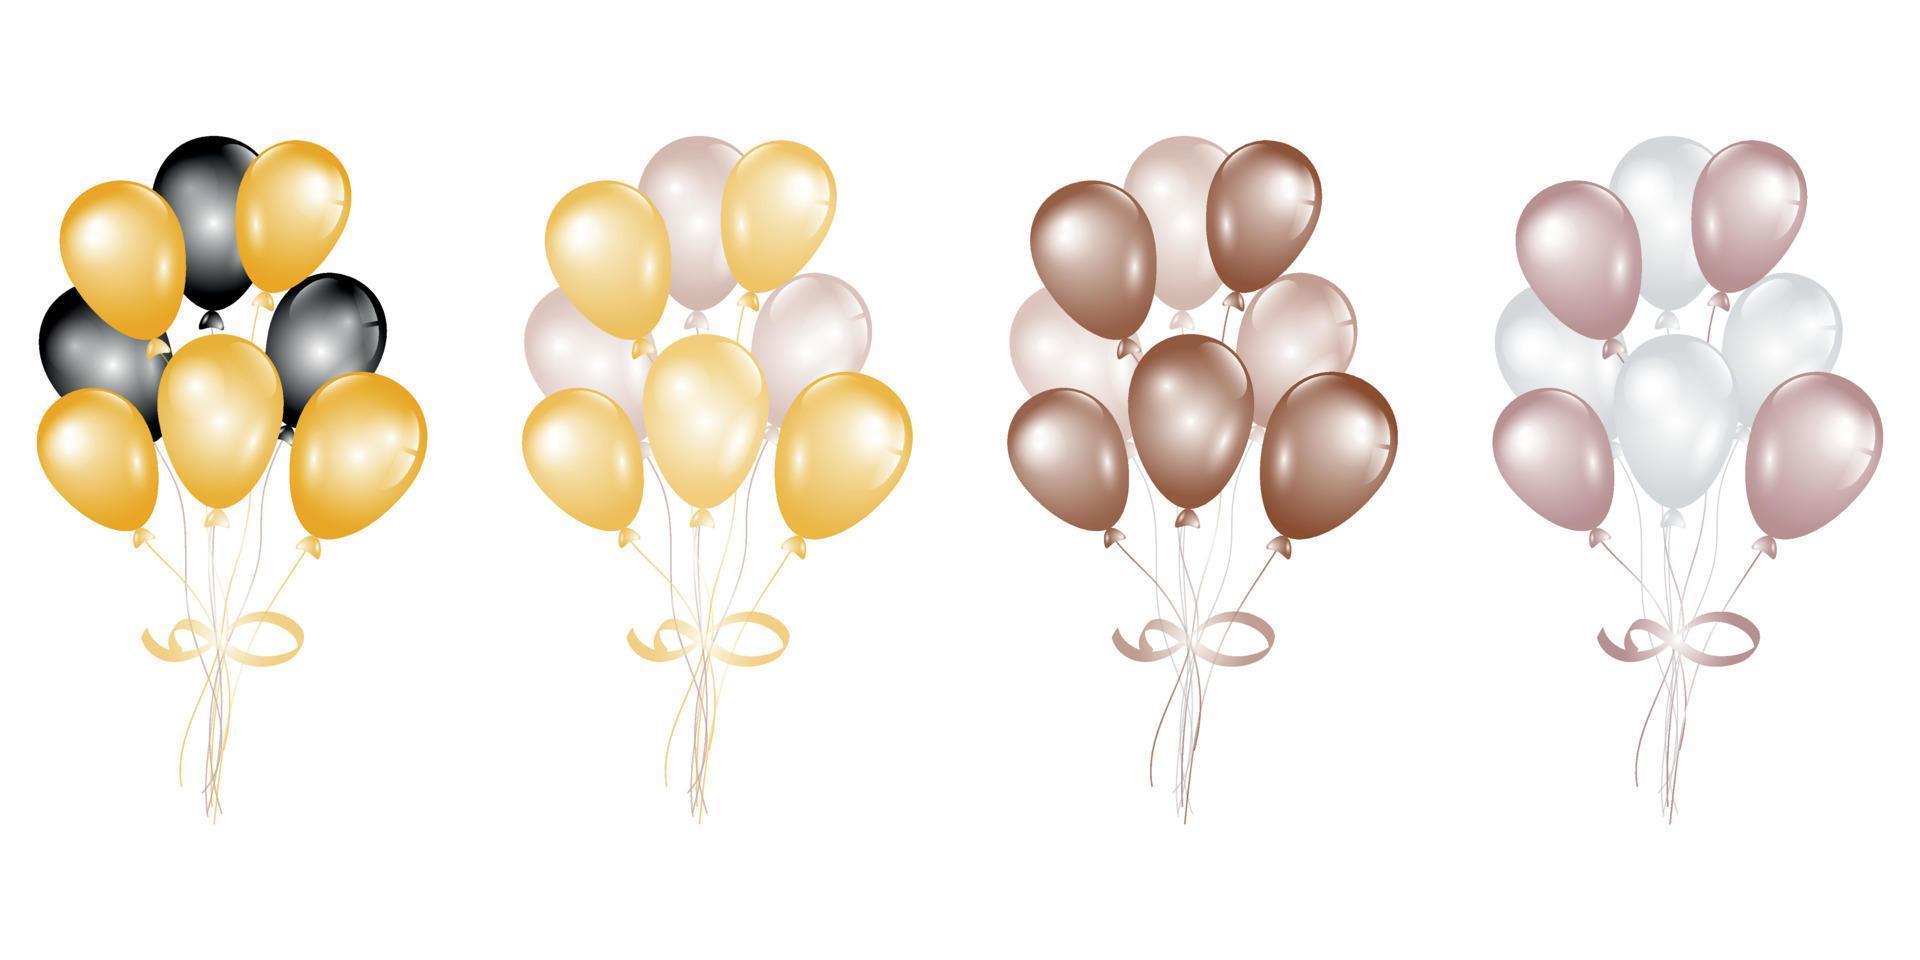 conjunto de bando de balões 3d coloridos, fio, fundo branco isolado. balão voador brilhante de cor, fita, comemorar aniversário, surpresa. presente de balão de hélio. forma realista vetor